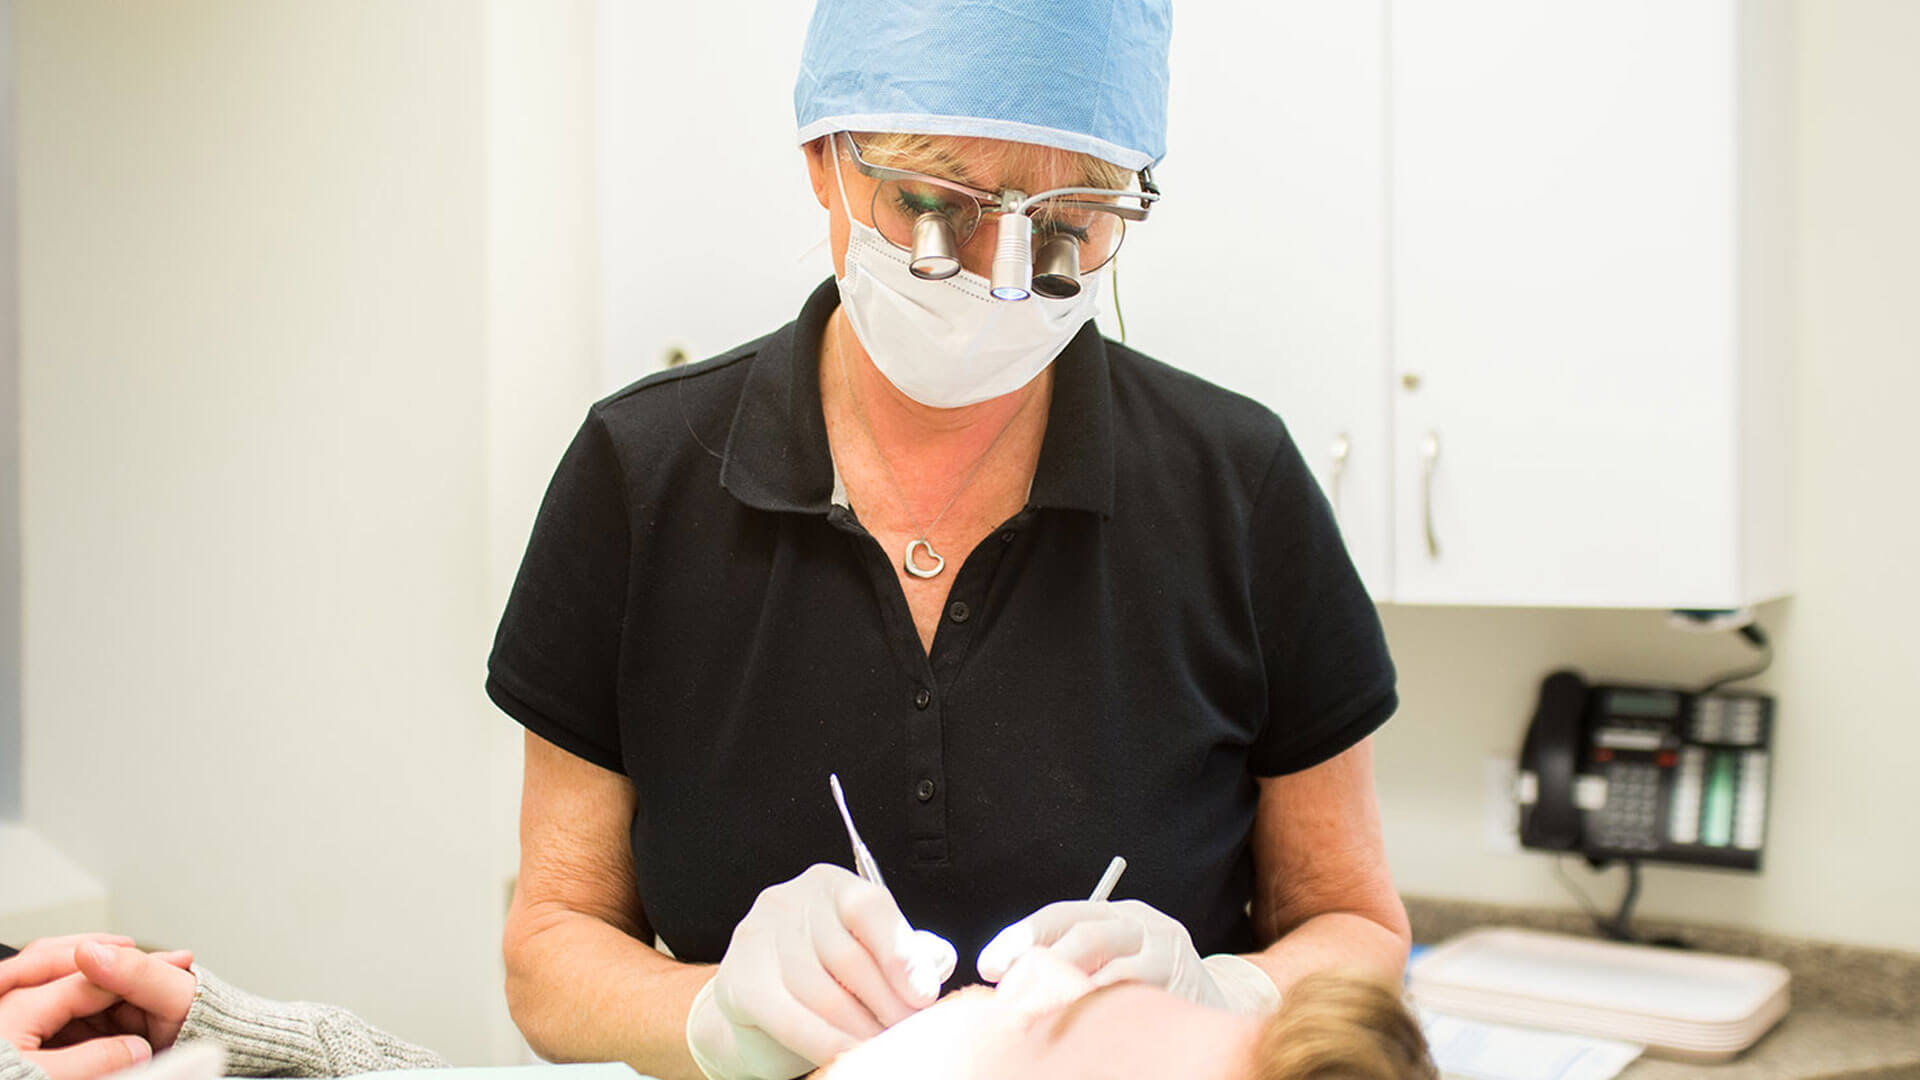 Mississauga Dental Implants, Digital Dental Implant Planning and Dental Implant Surgery